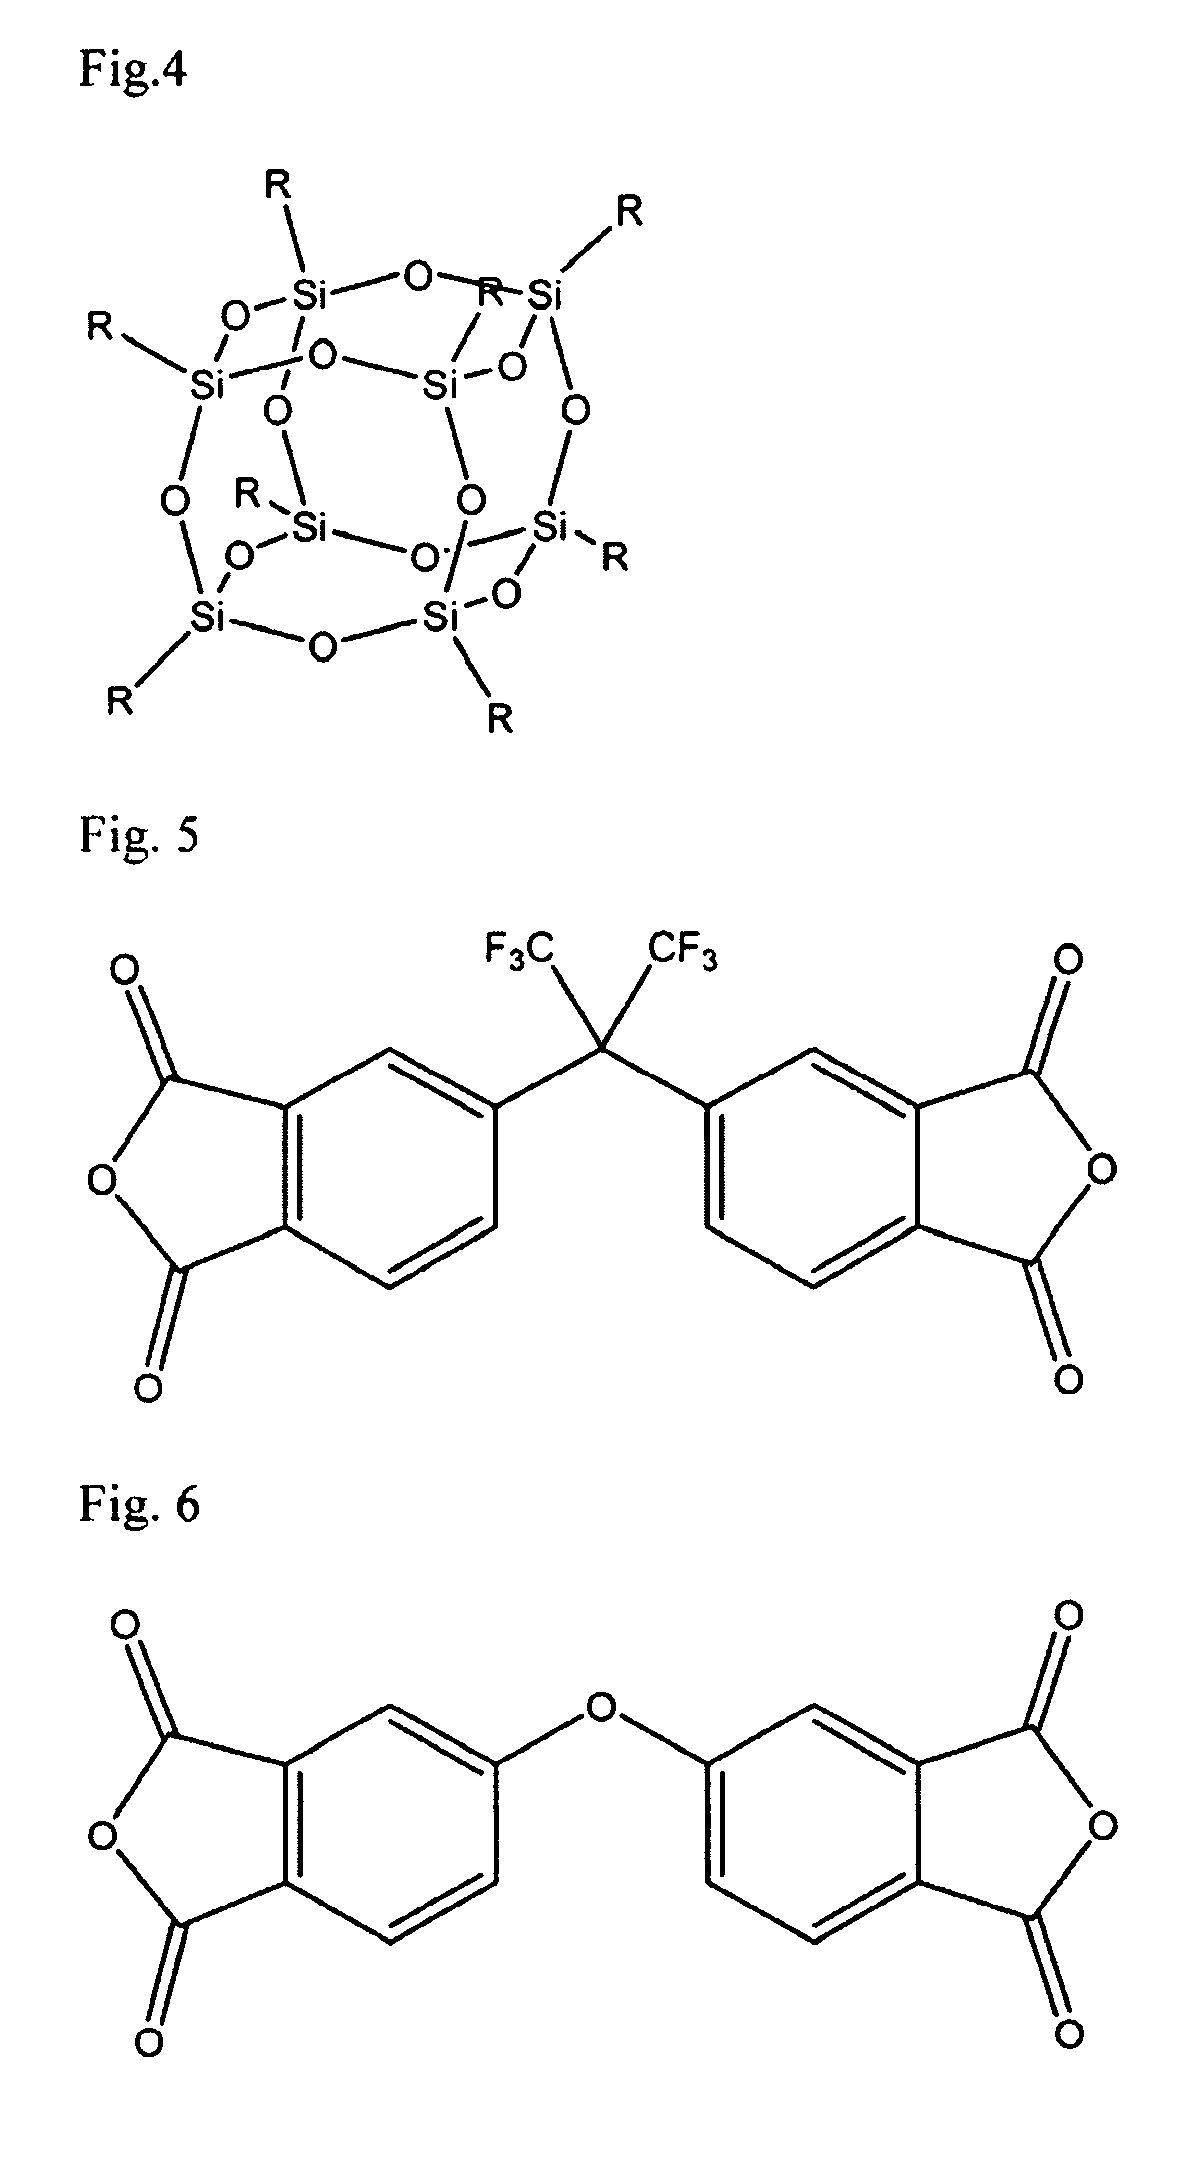 Polyimide polymer with oligomeric silsesquioxane